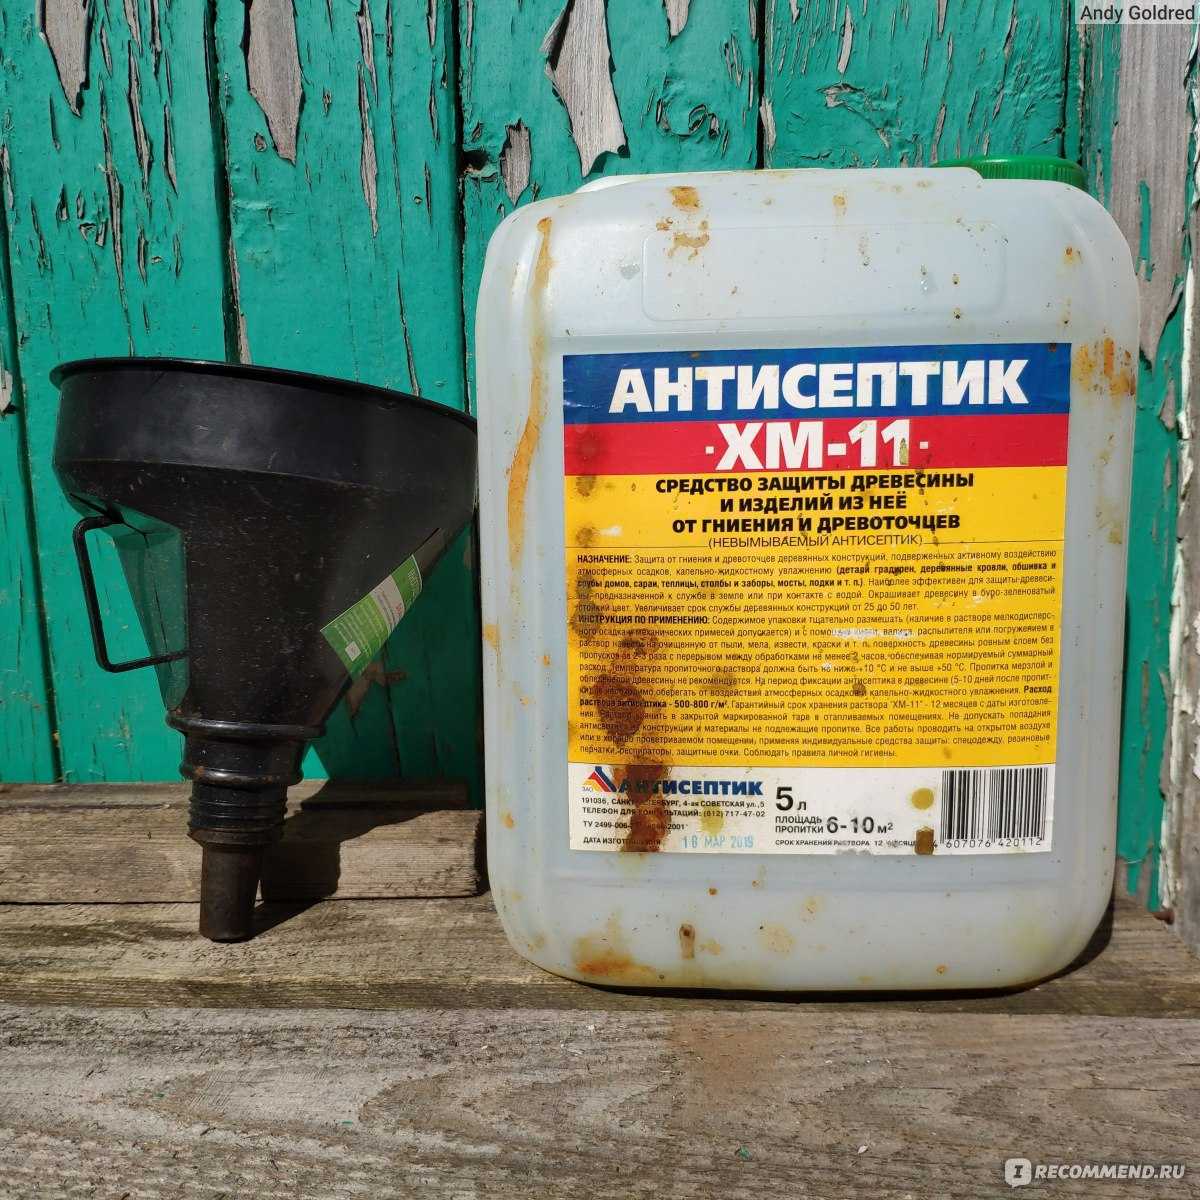 Антисептик для дерева своими руками — состав, как сделать – ремонт своими руками на m-stone.ru